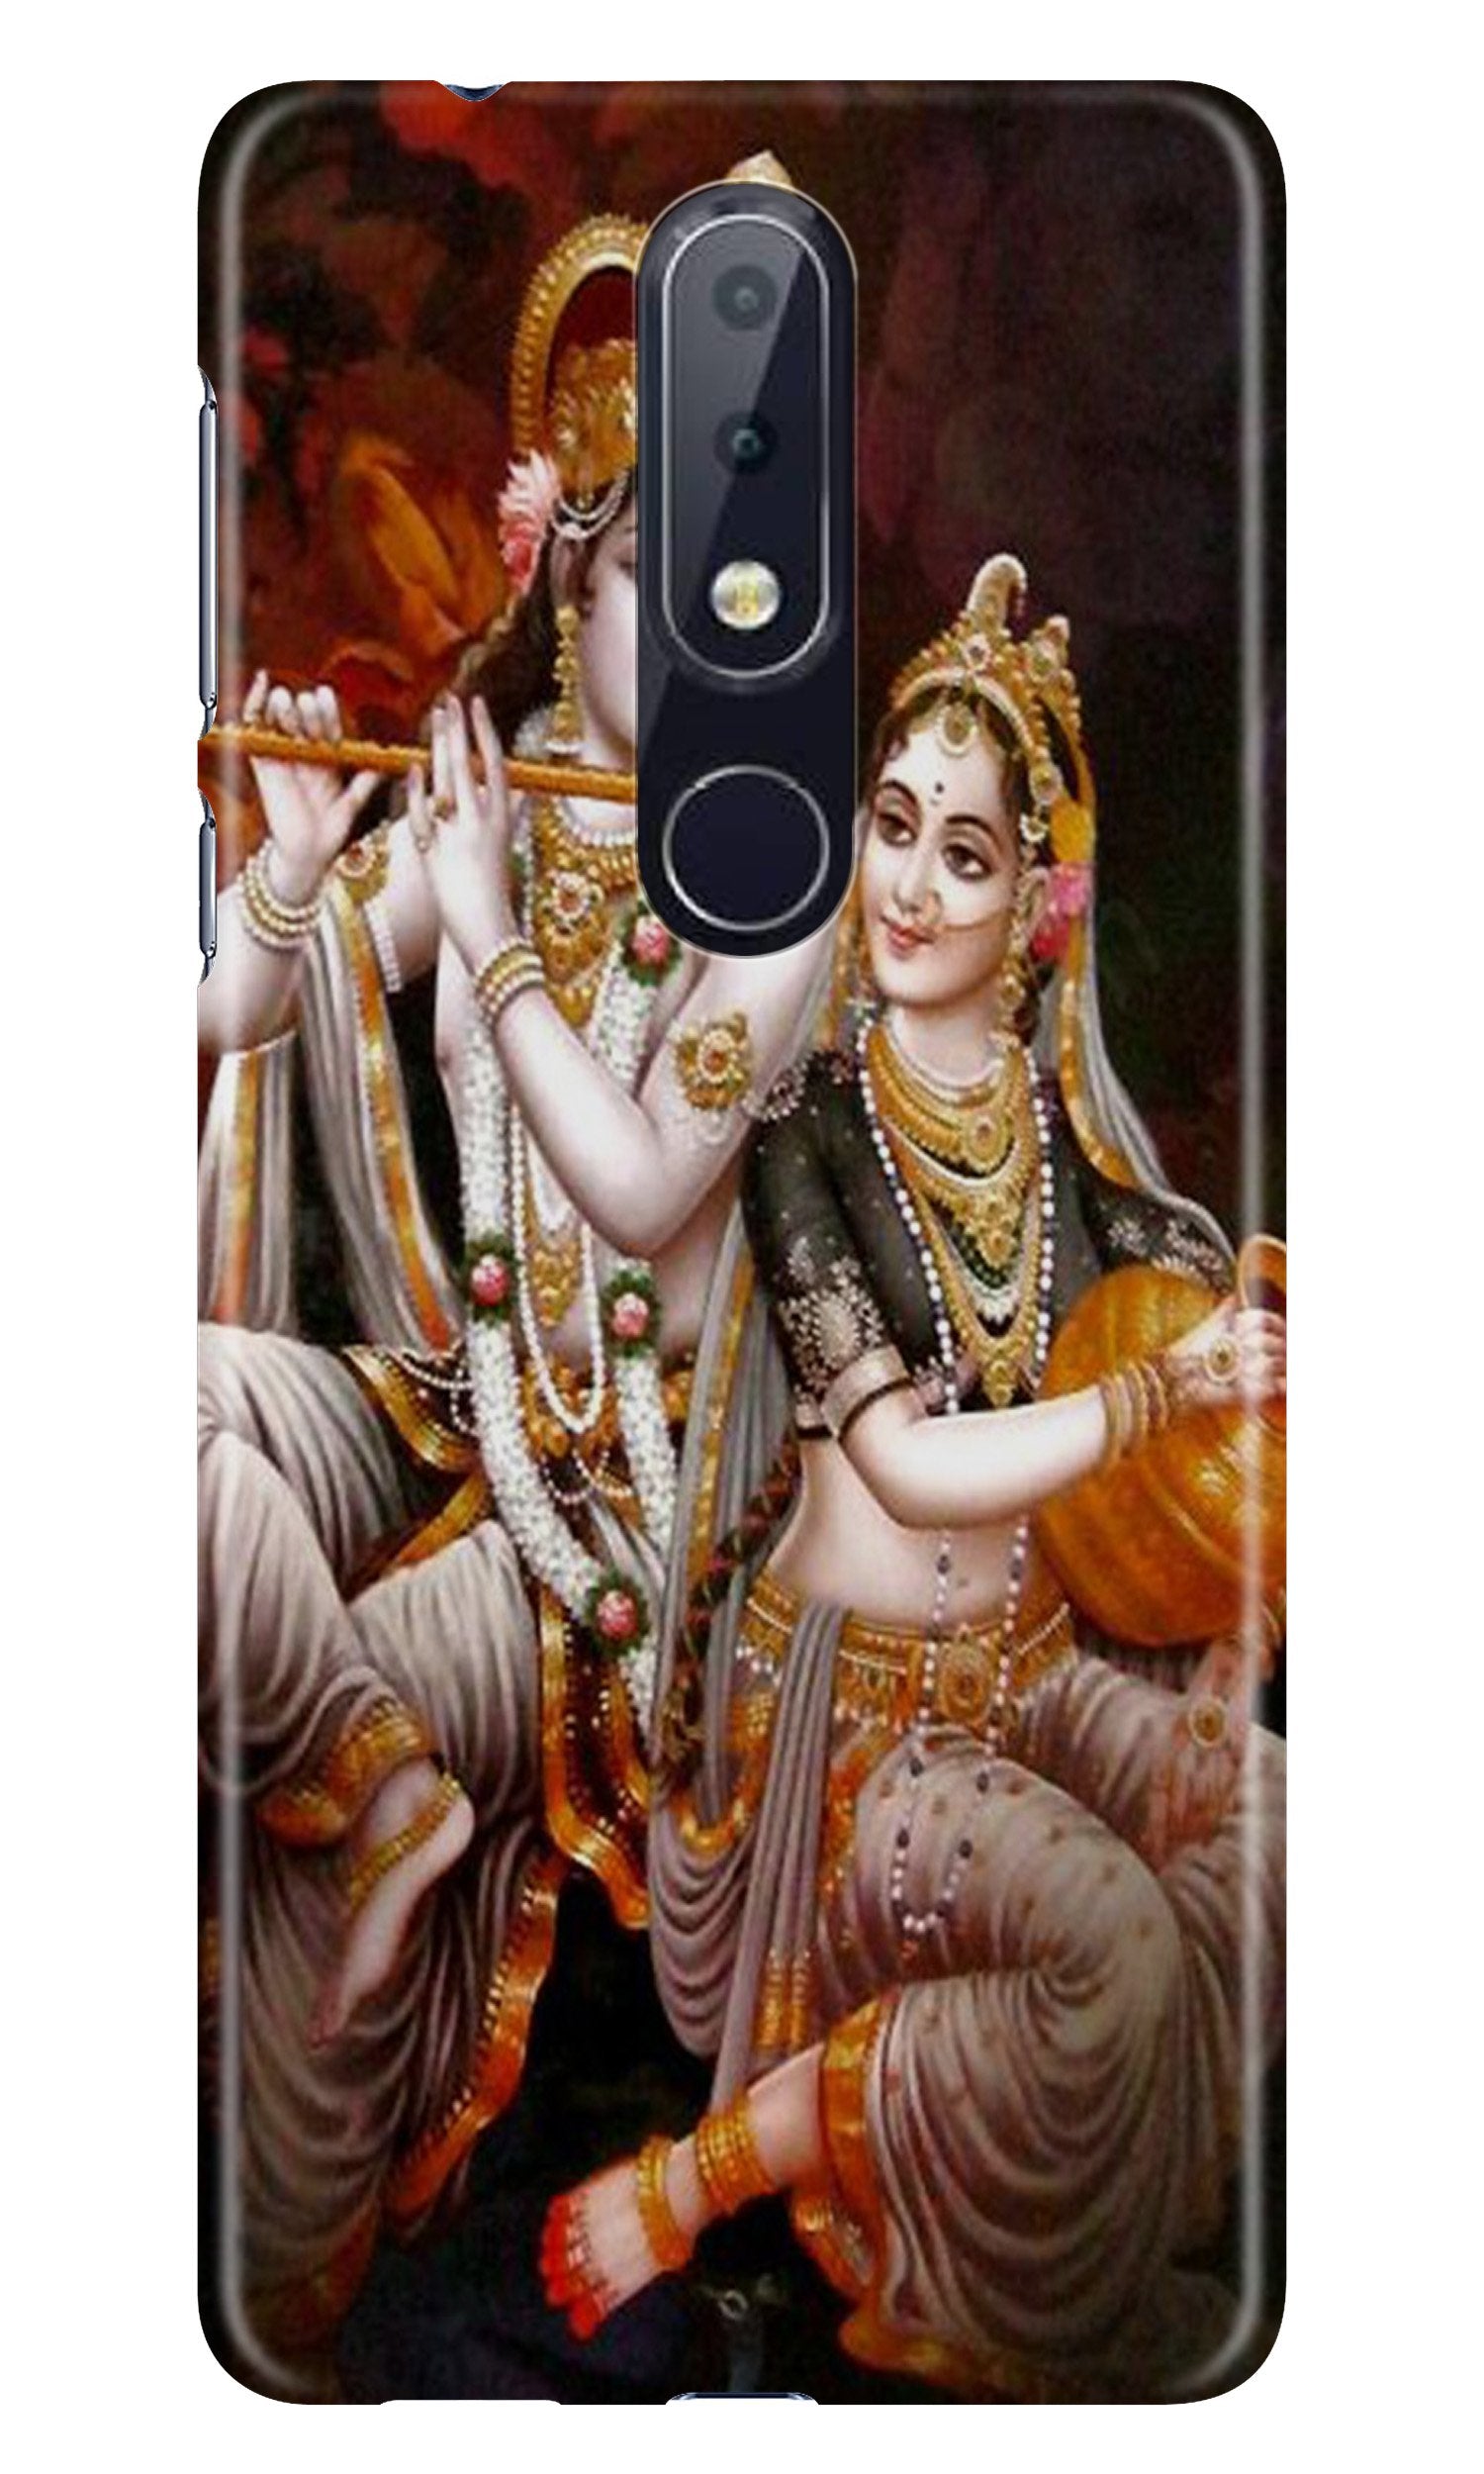 Radha Krishna Case for Nokia 4.2 (Design No. 292)